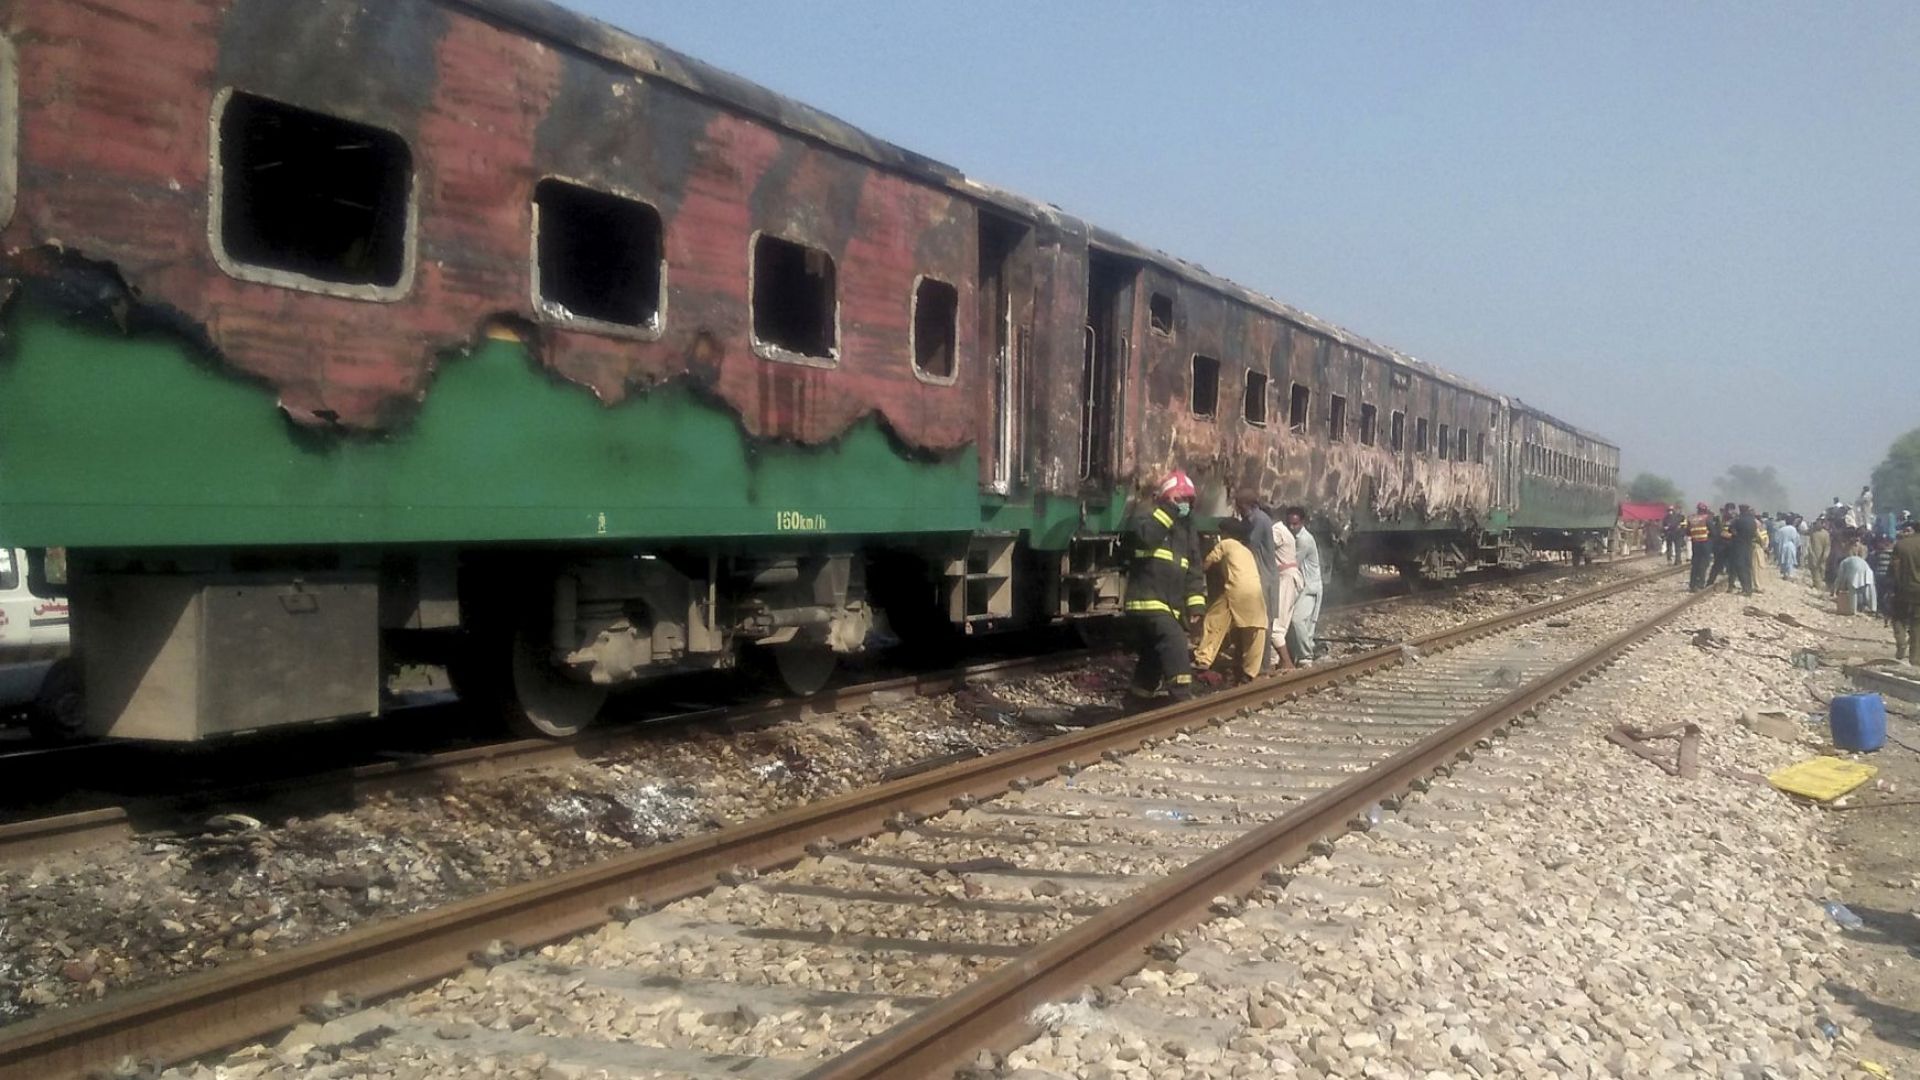 Най-малко 65 души изгоряха живи при пожар в пакистански влак (видео)